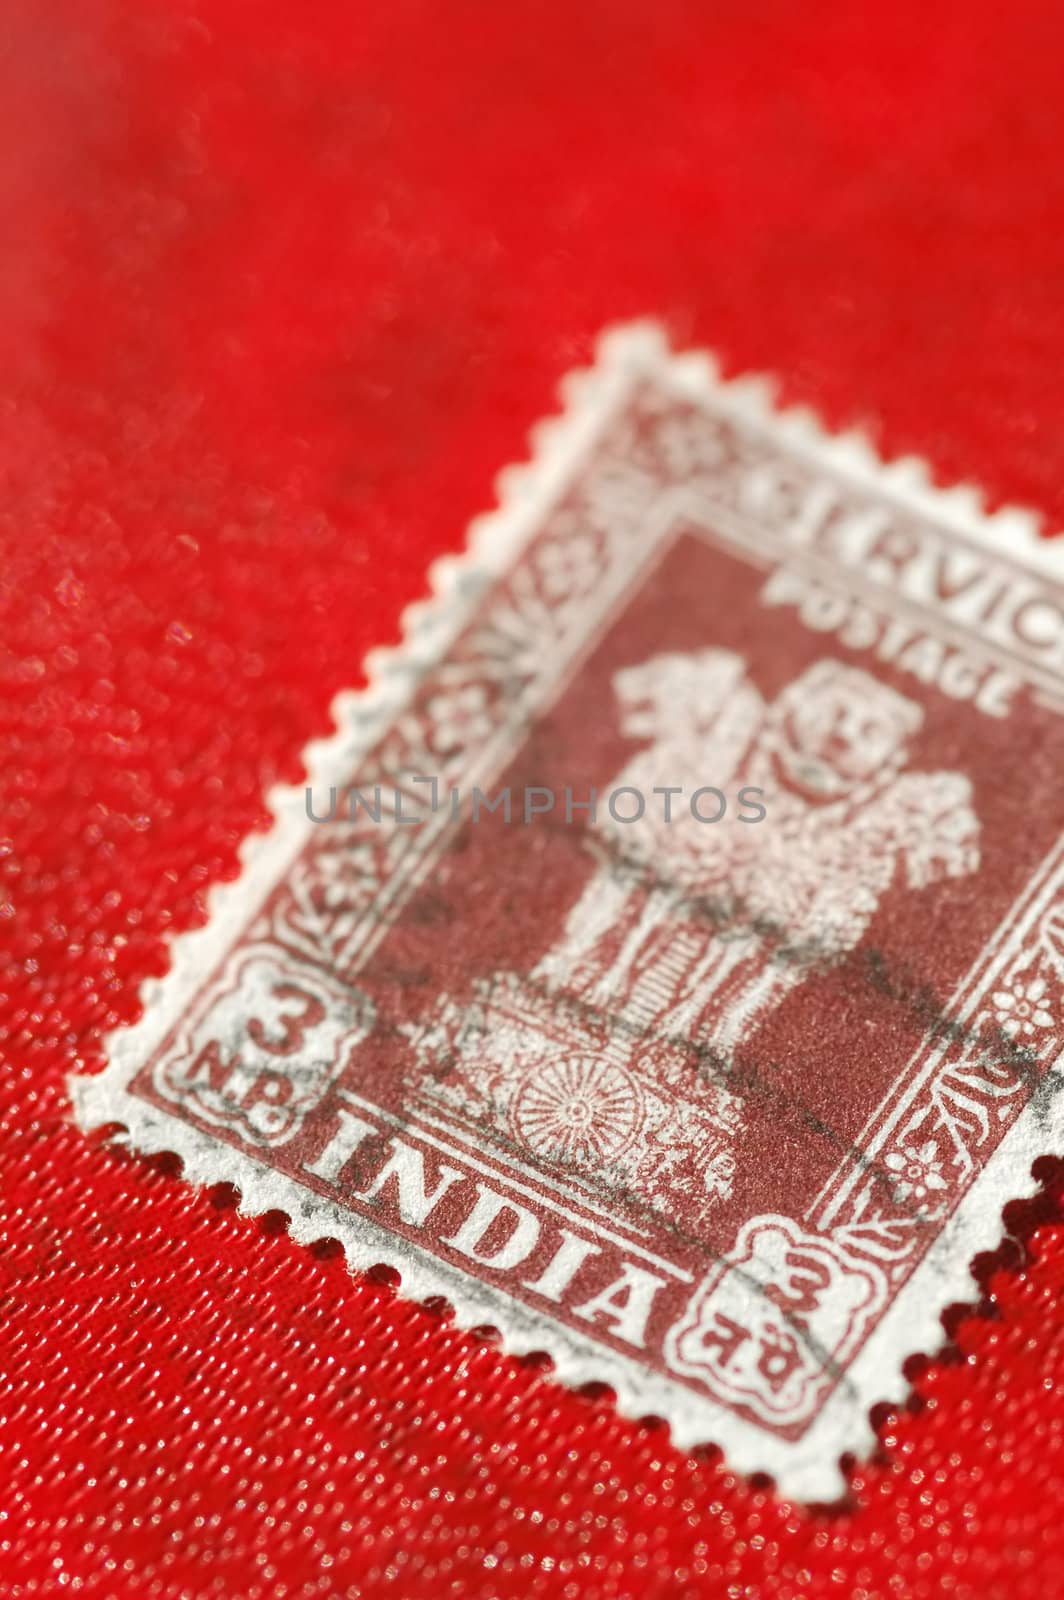 vintage Indian postage stamp on a red background